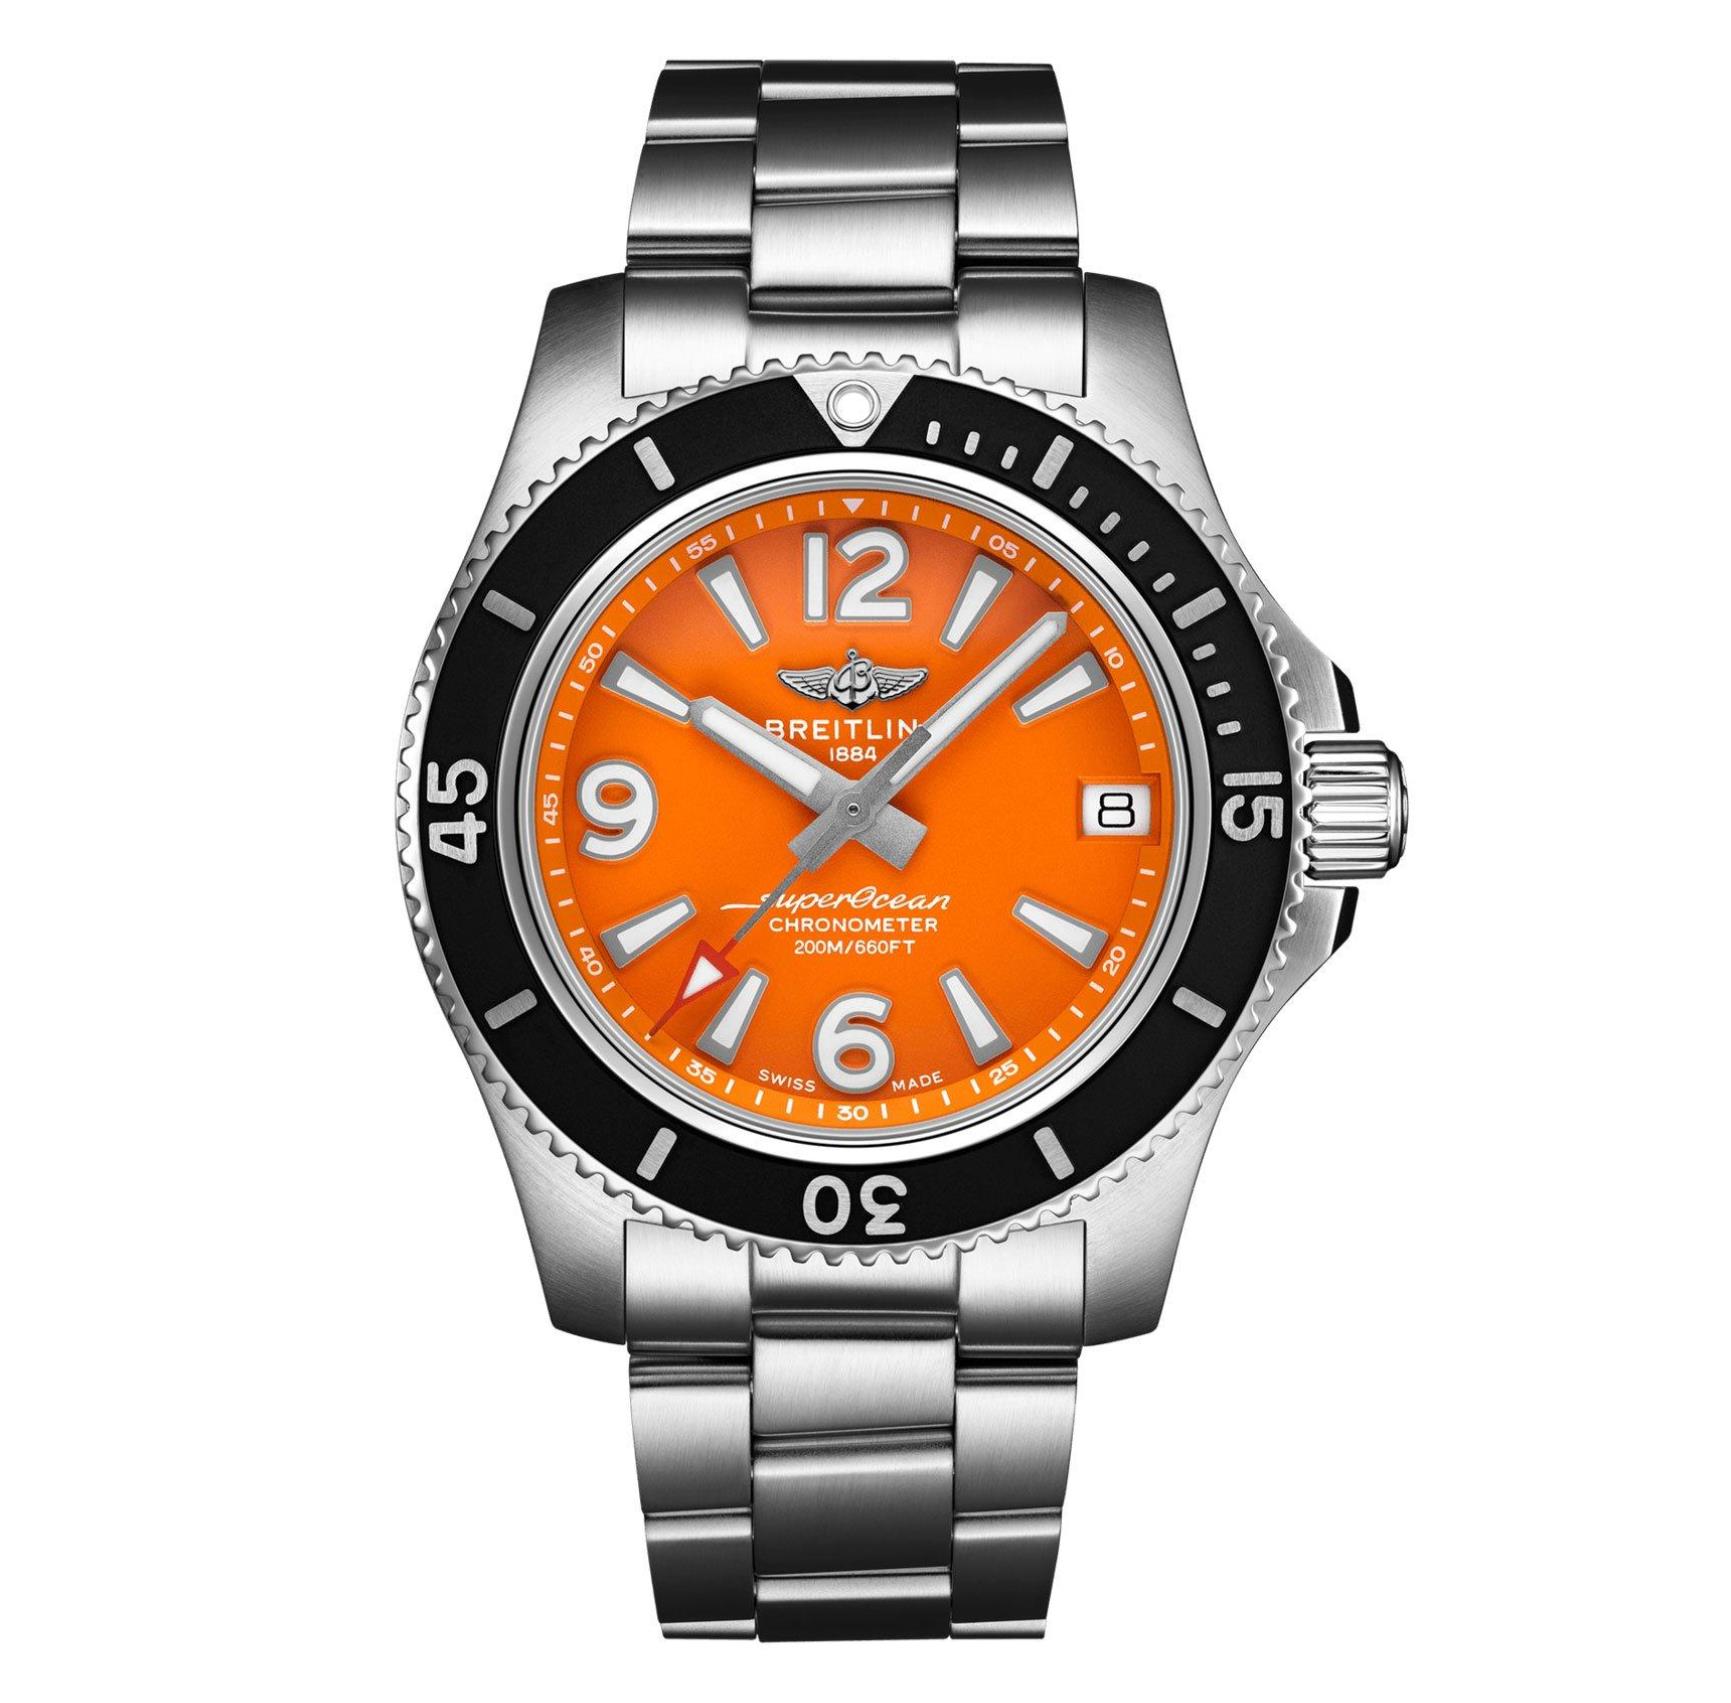 The orange dial fake watch has a black bezel.